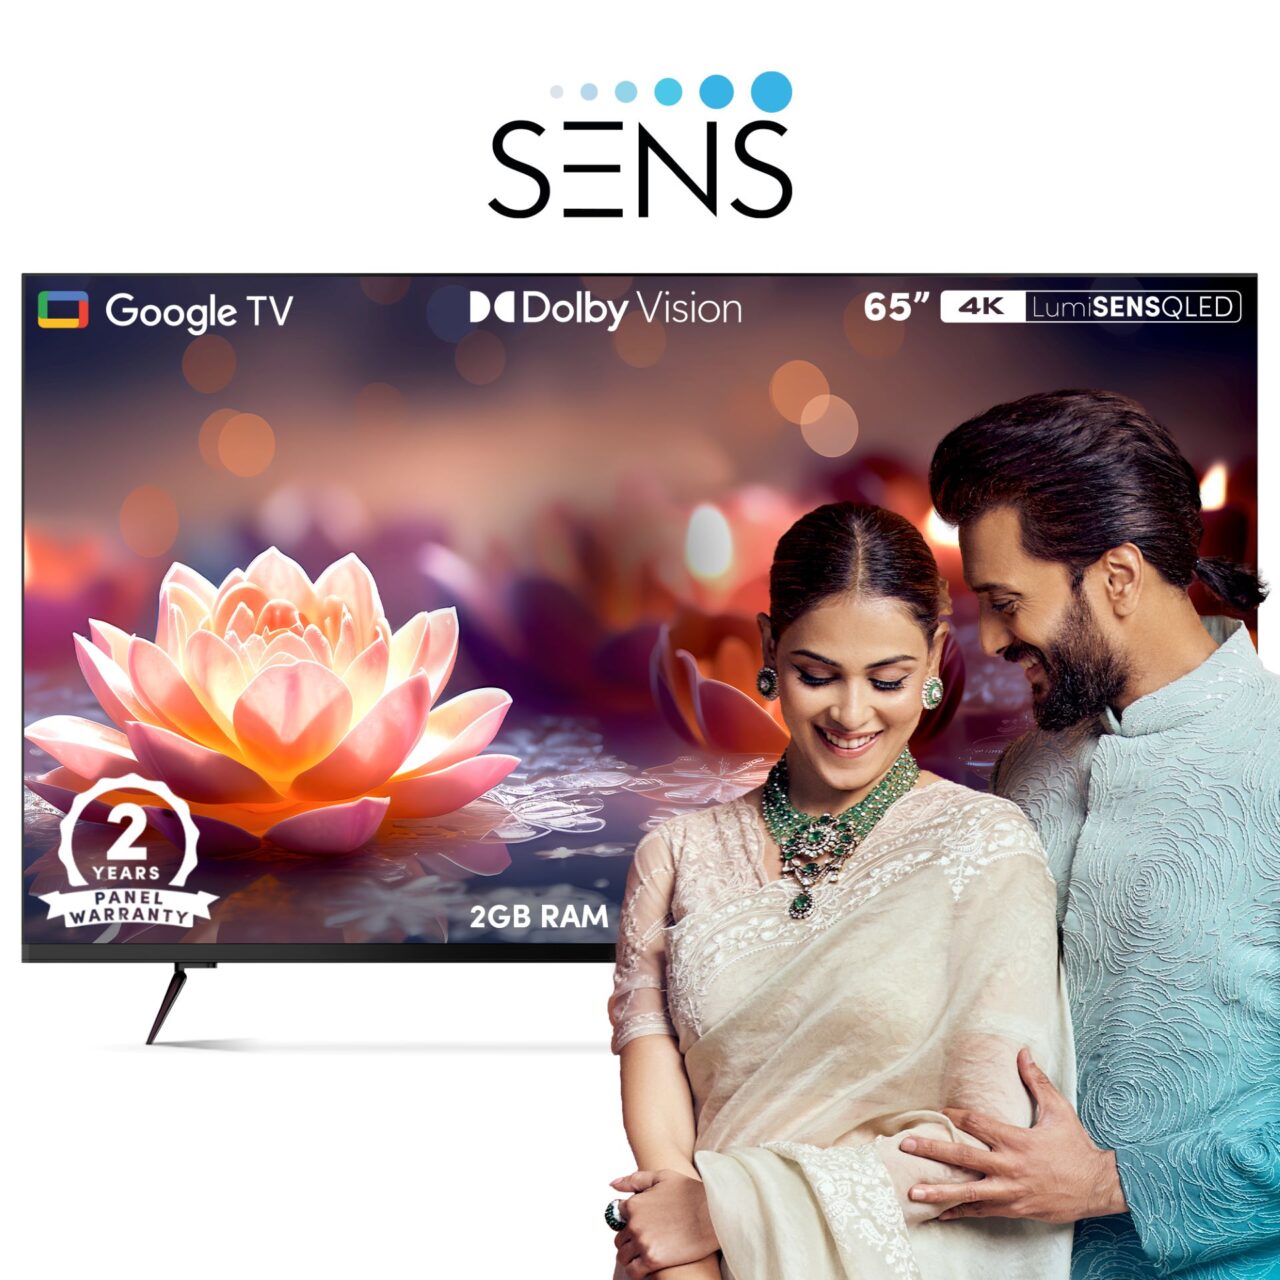 SENS SMART TVs Achieves Strong Sales on Flipkart